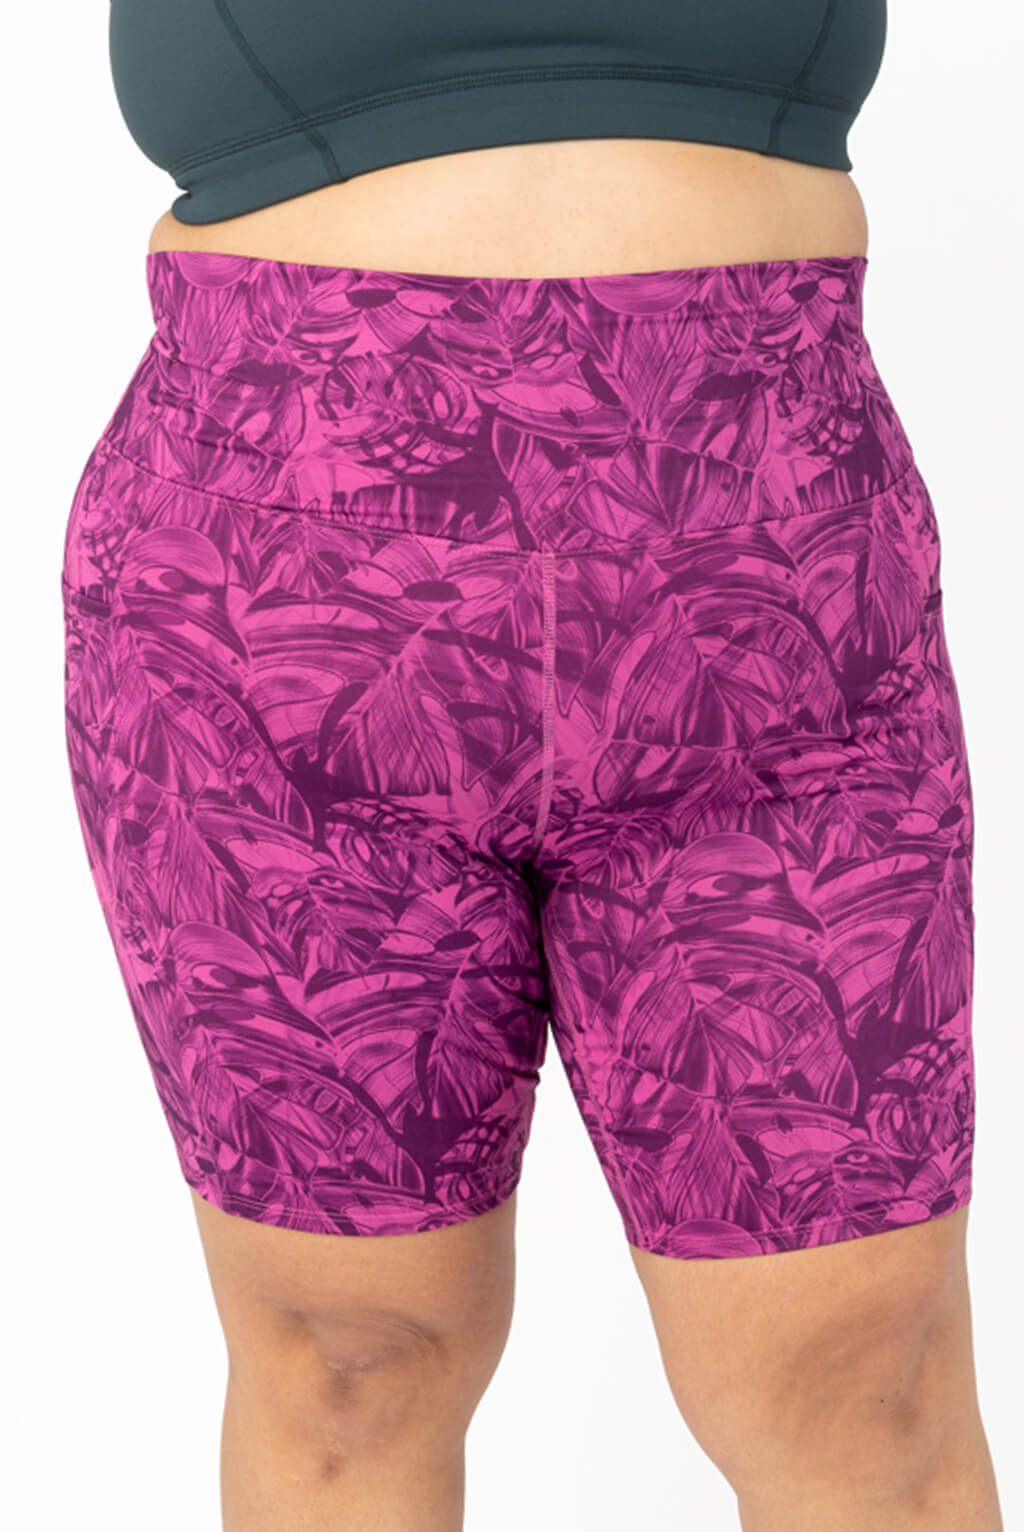 superfit pocket bike shorts in colorful prints, front